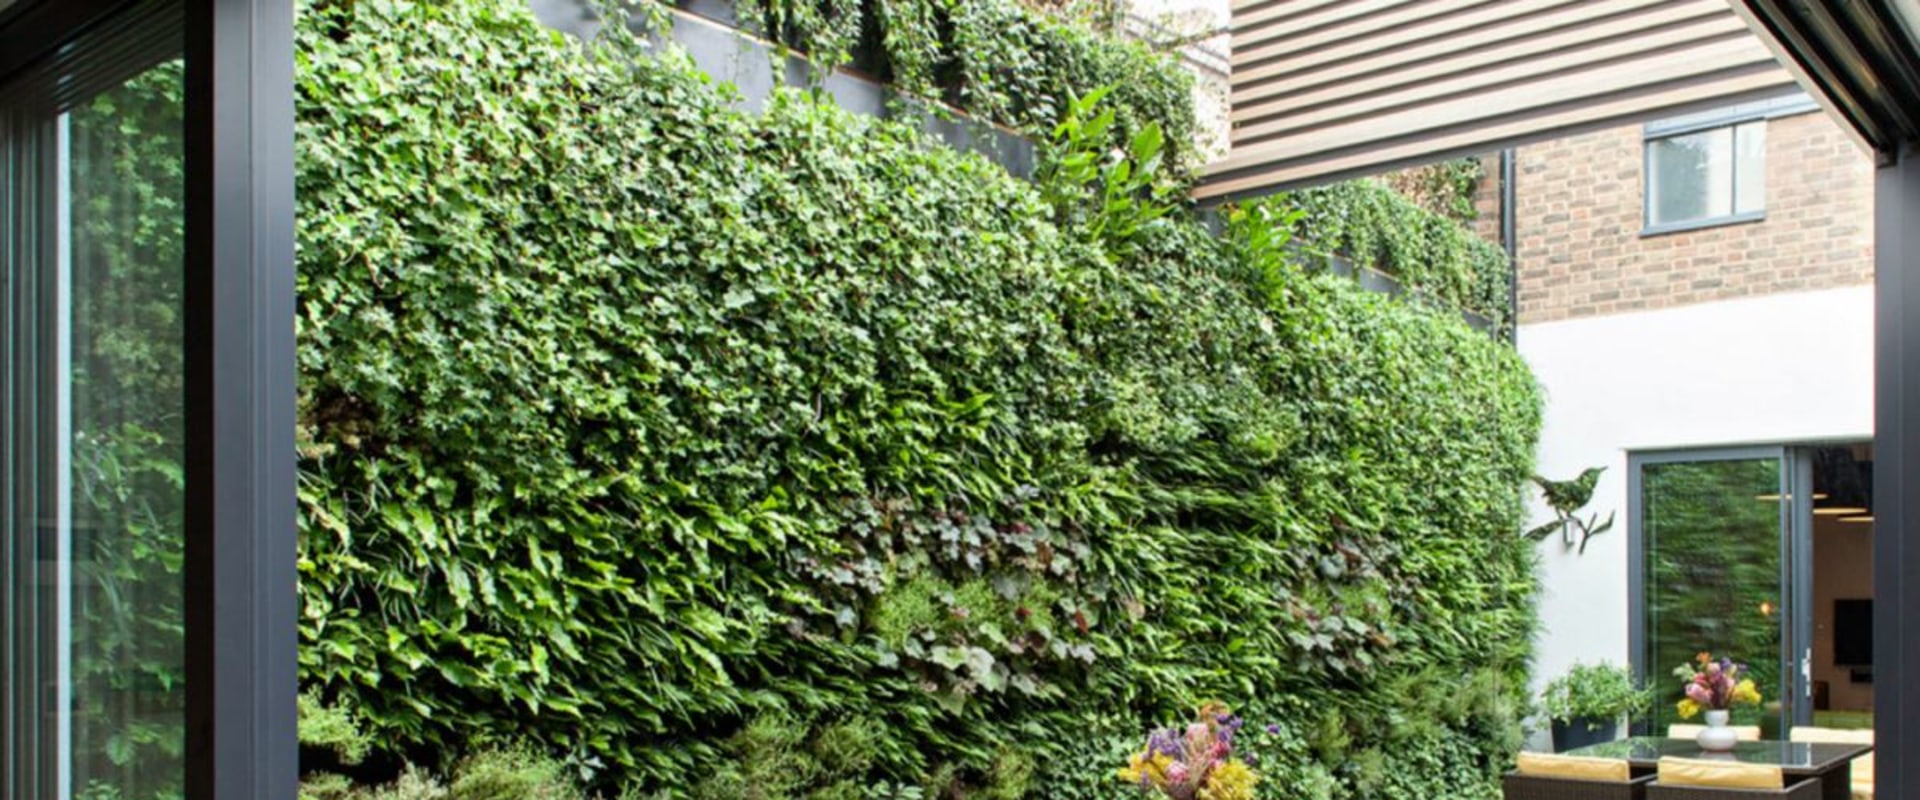 Exploring Vertical Gardens: Sustainable Home Design Ideas